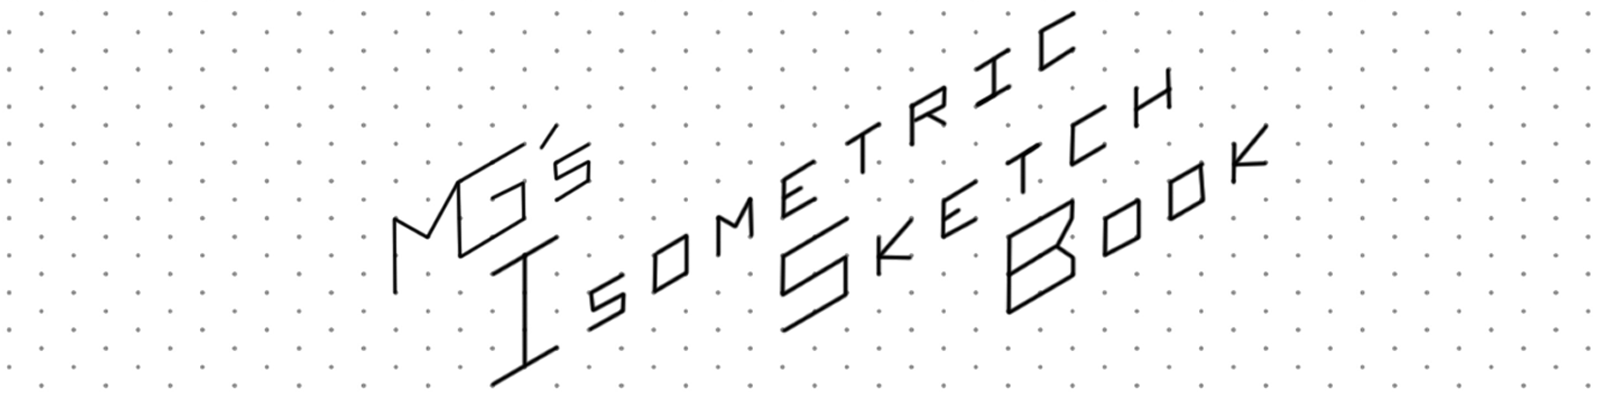 Mini Isometric Grid Sketchbook